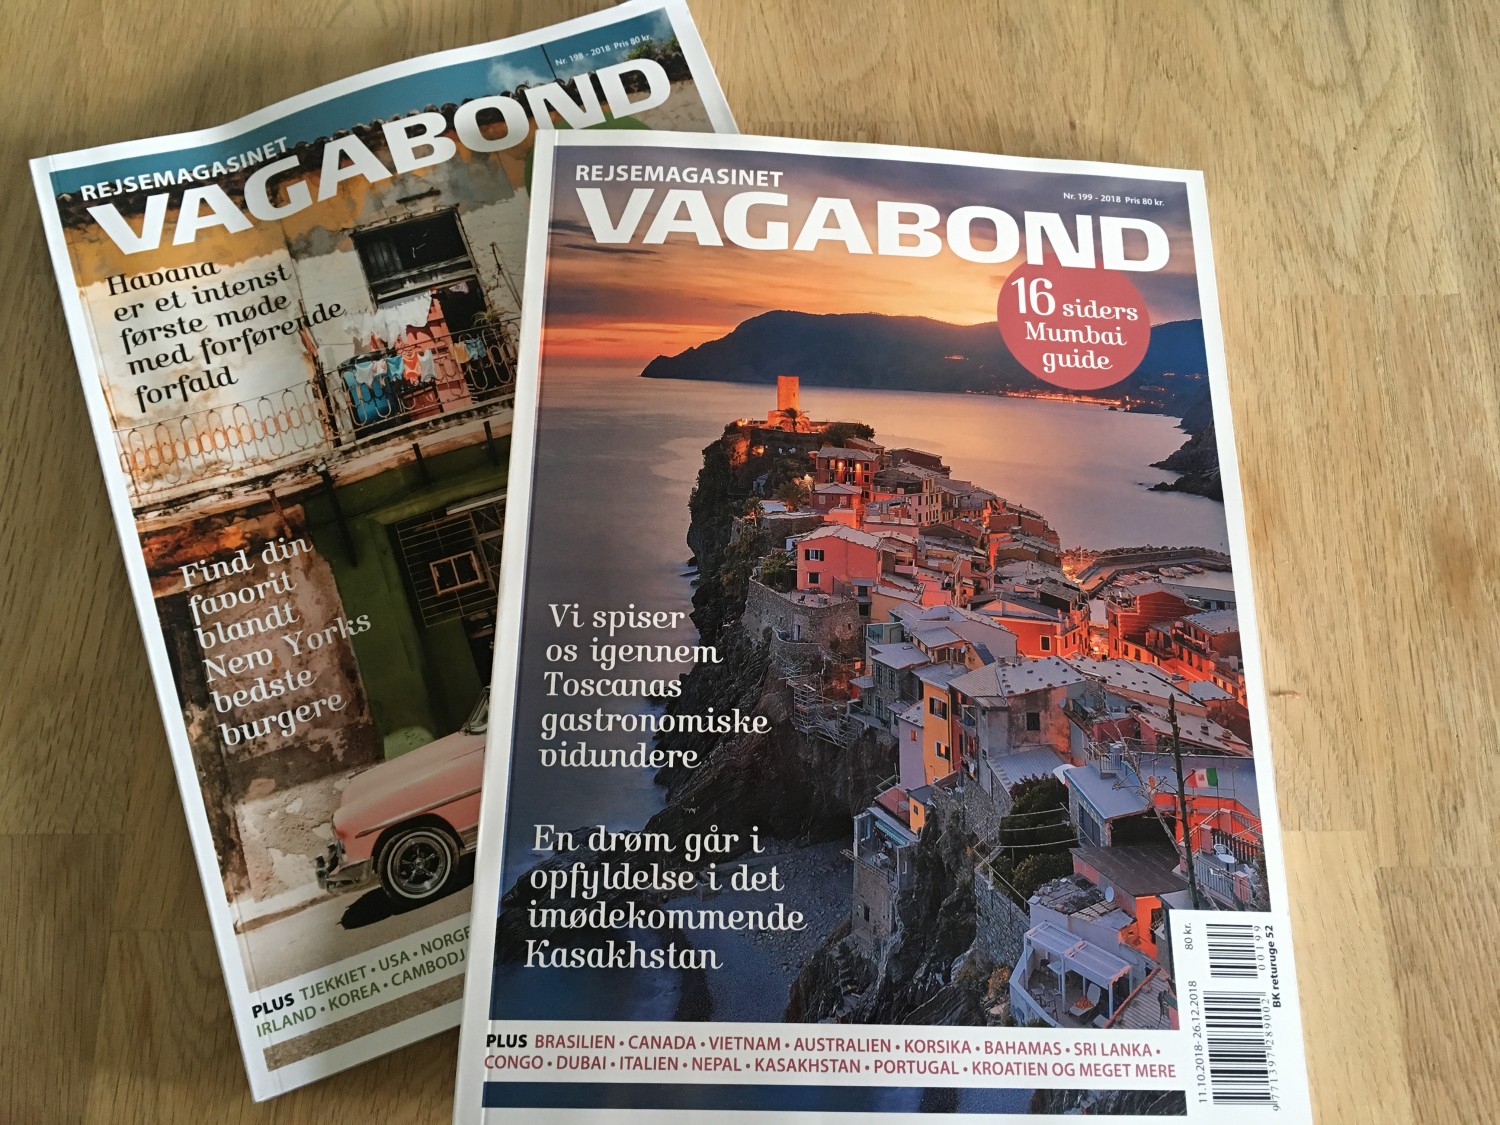 Friday – Rejsemagasinet Vagabond | Friday findings | globetrotterpaadybtvand